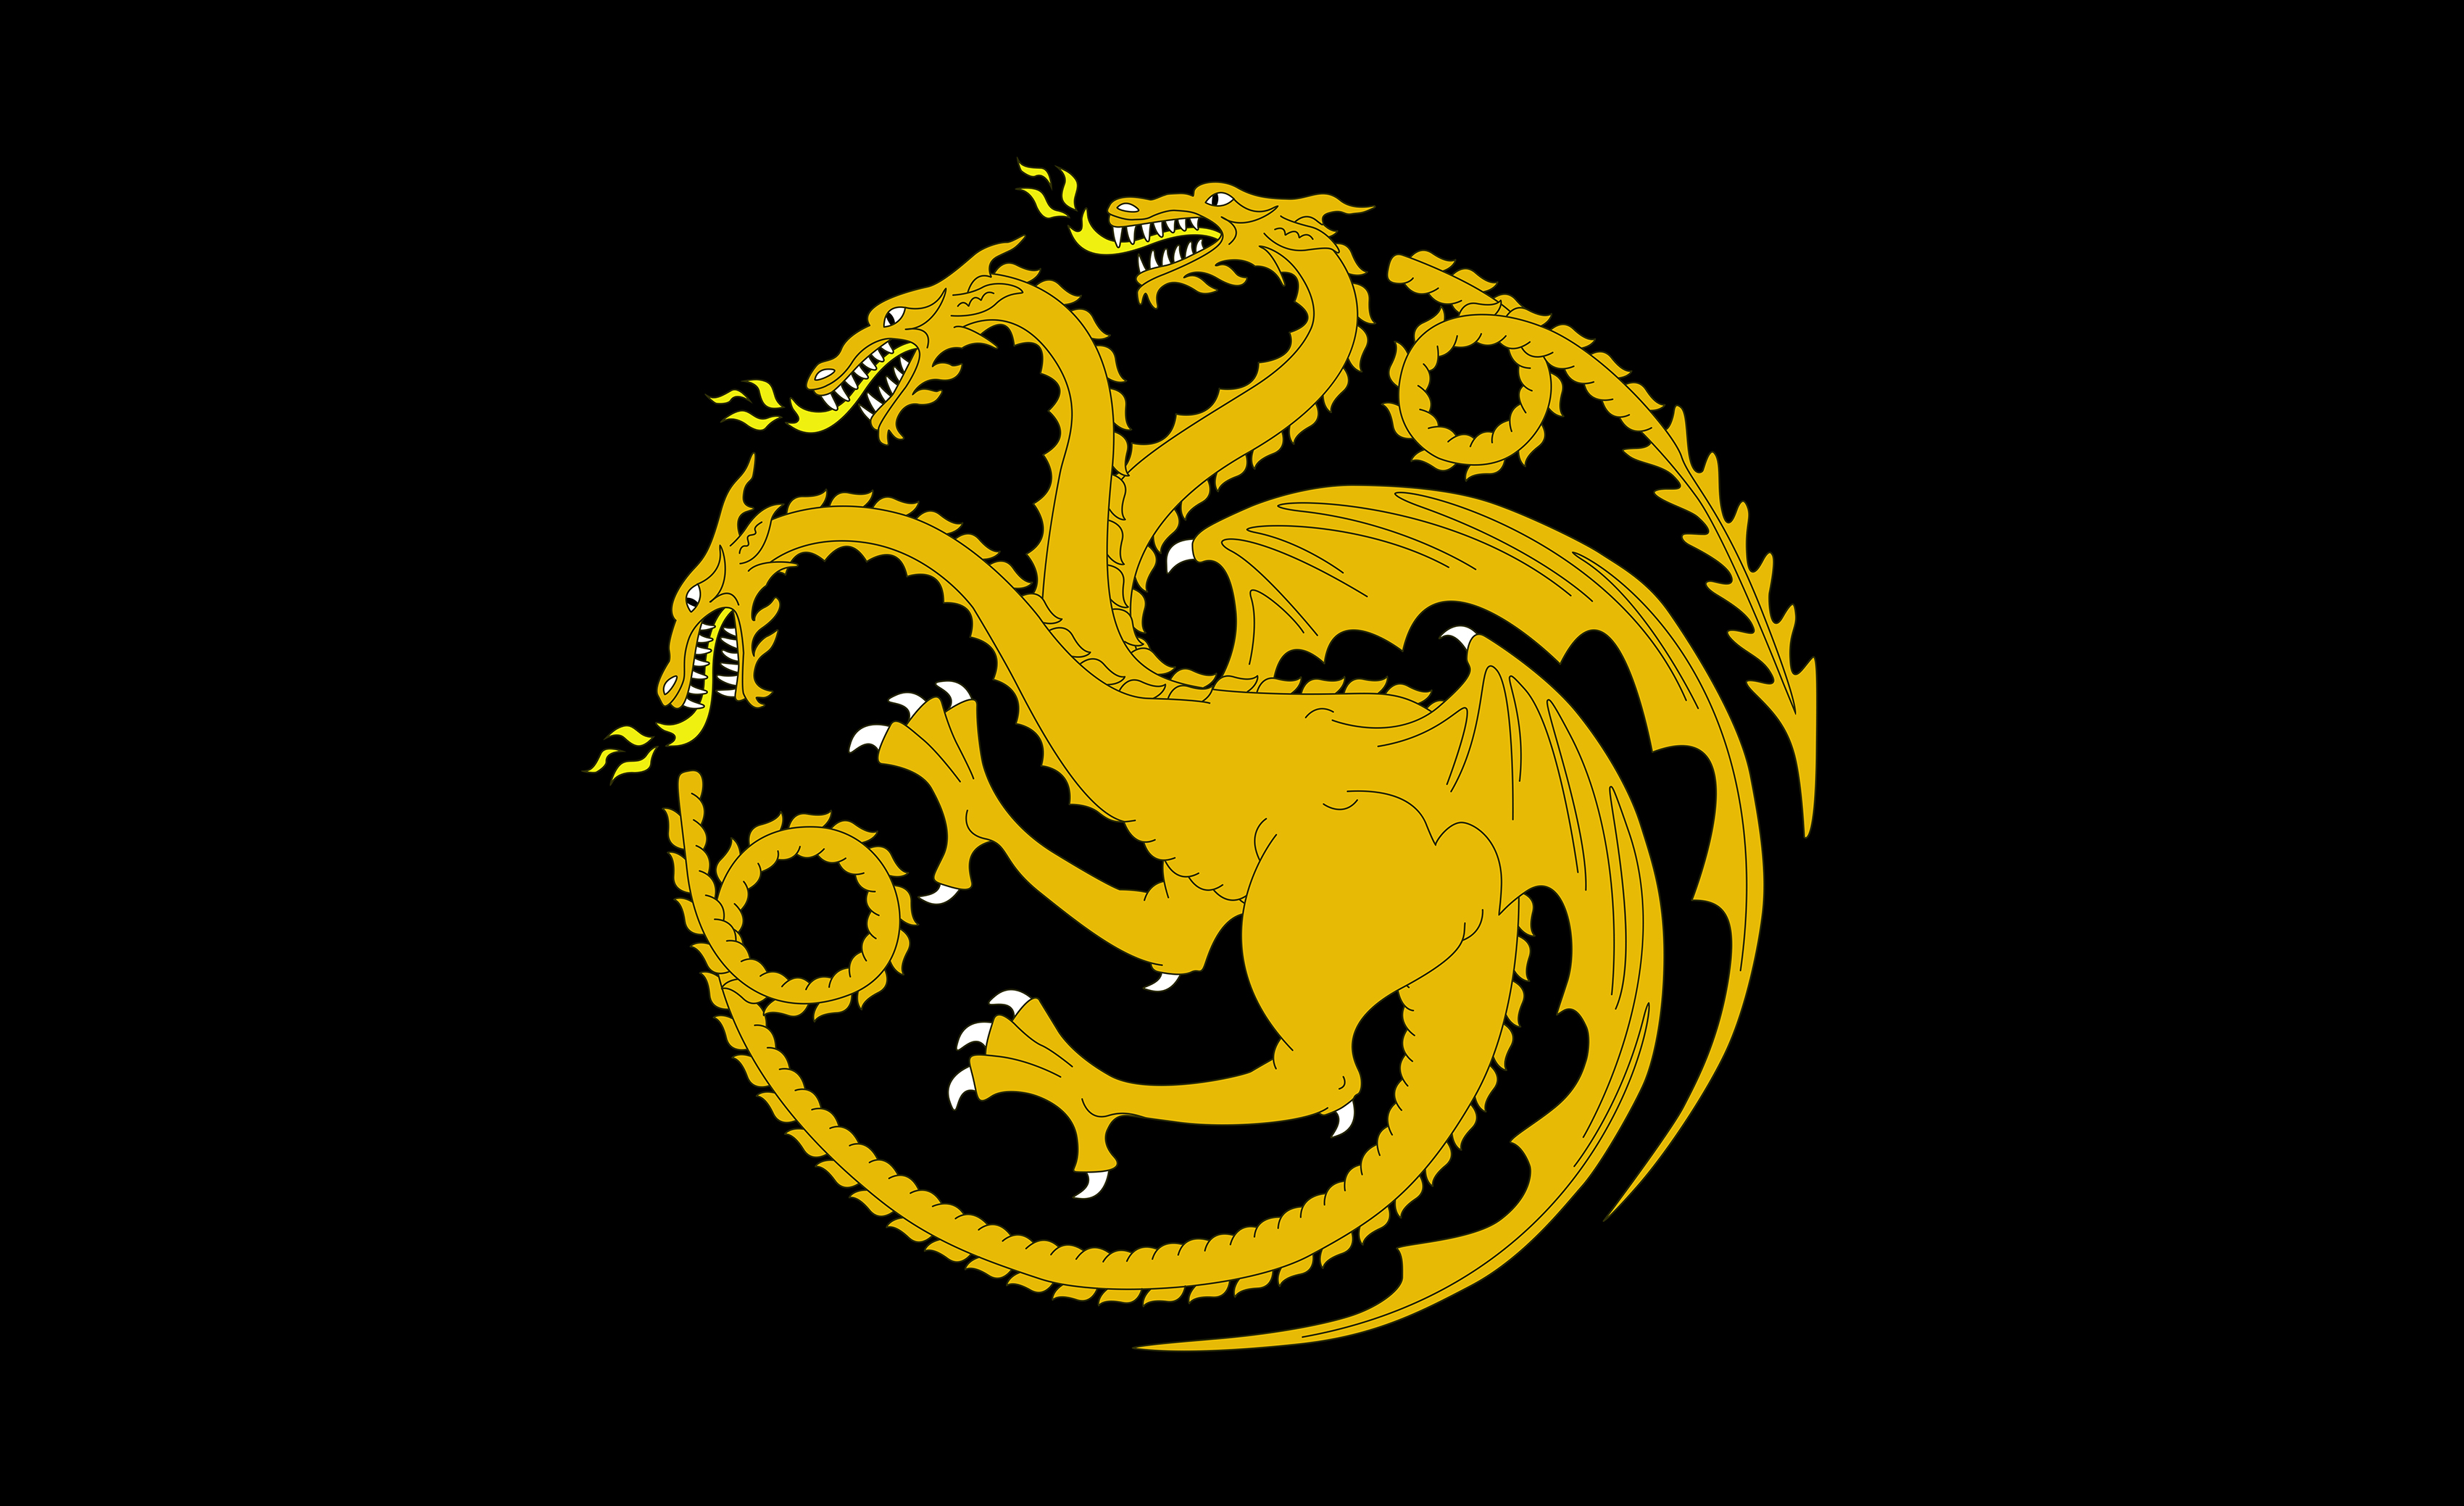 ASOIAF - House Targaryen (Aegon II) by thehive1948 on DeviantArt